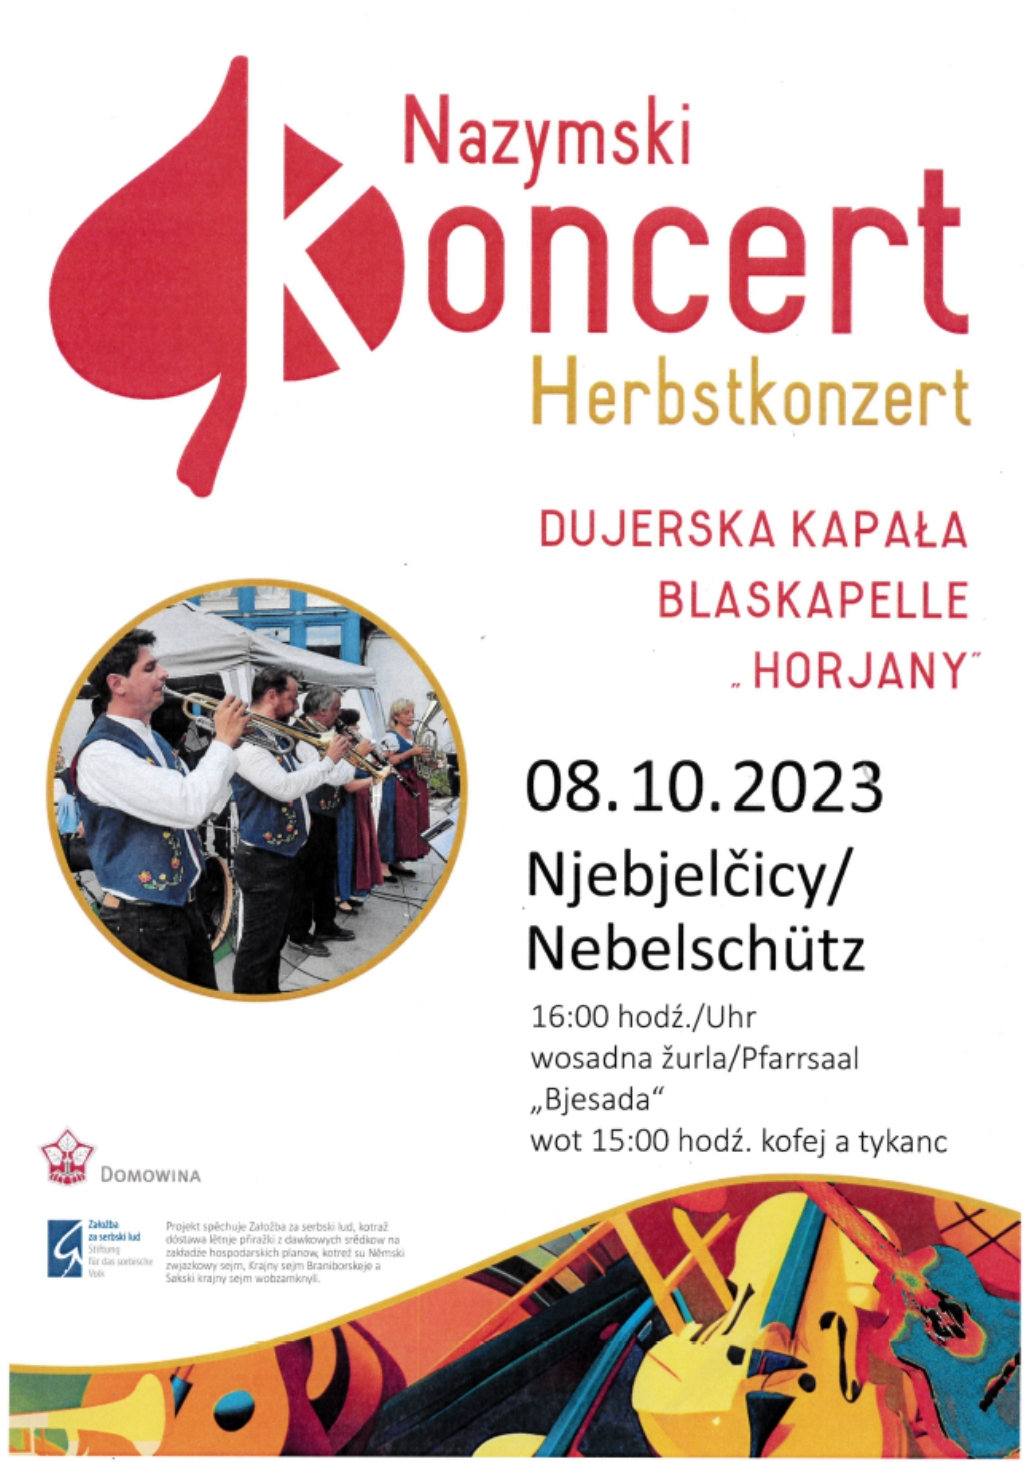 2023 10 08 Herbstkonzert Nazymski koncert